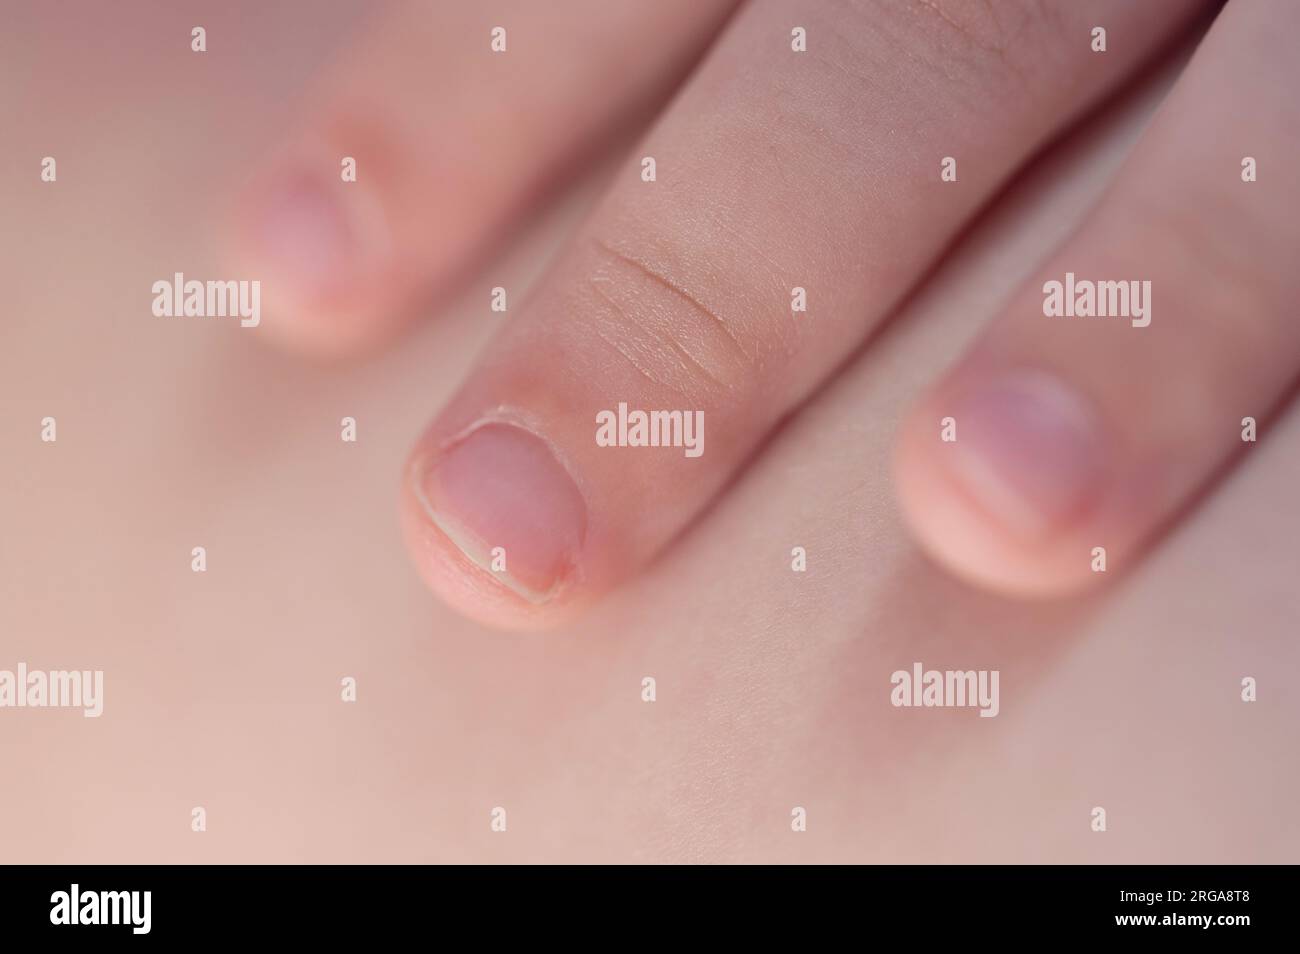 Baby suck finger problem macro close up view. Flat damage finger nail Stock Photo